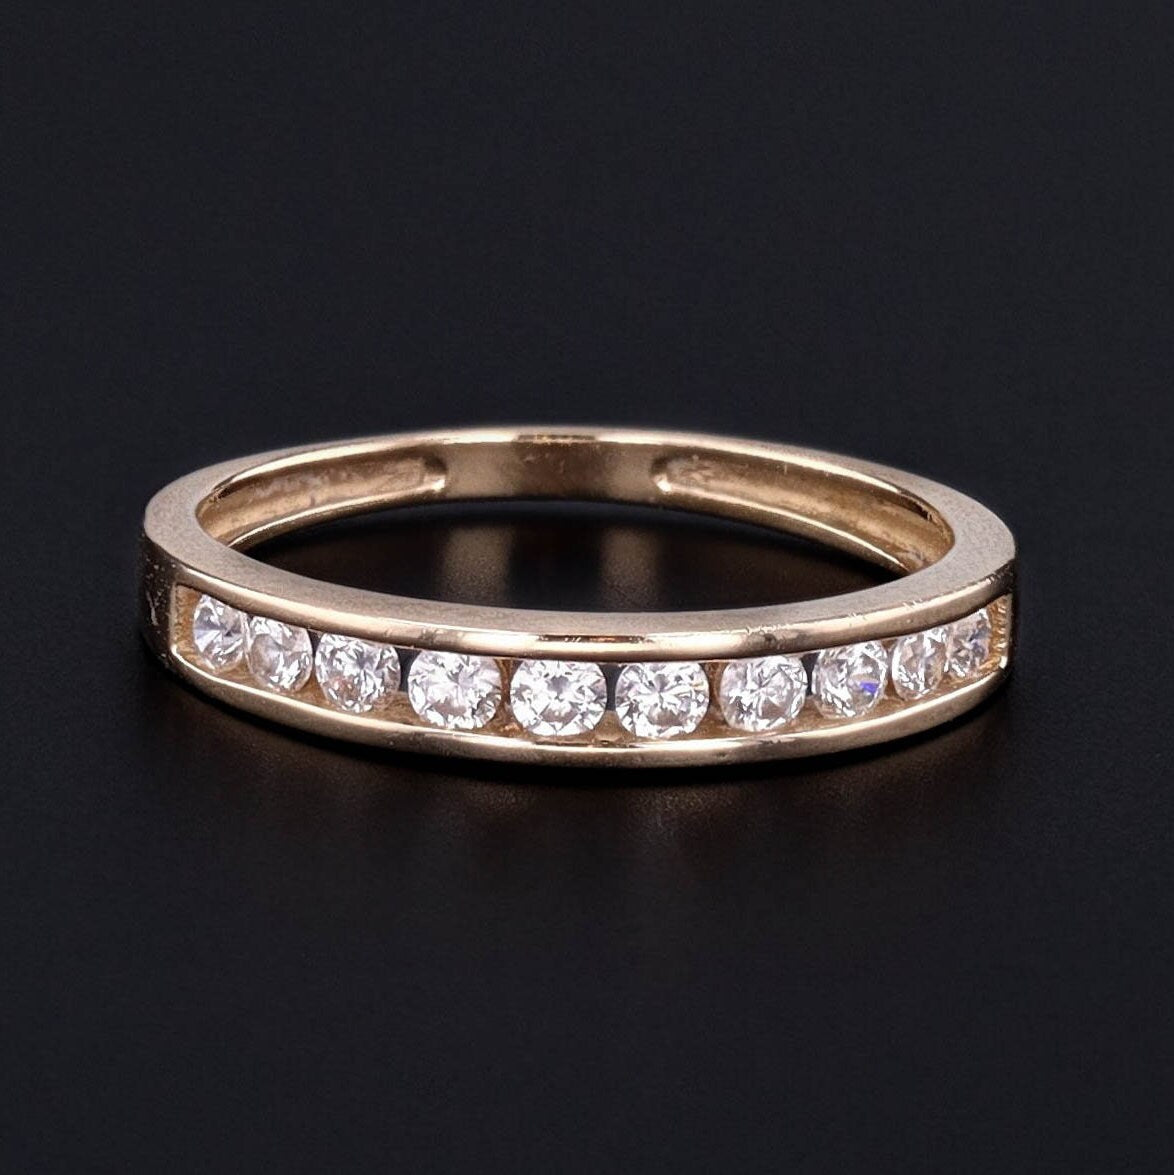 Vintage Channel Set Diamond Ring of 14k Gold